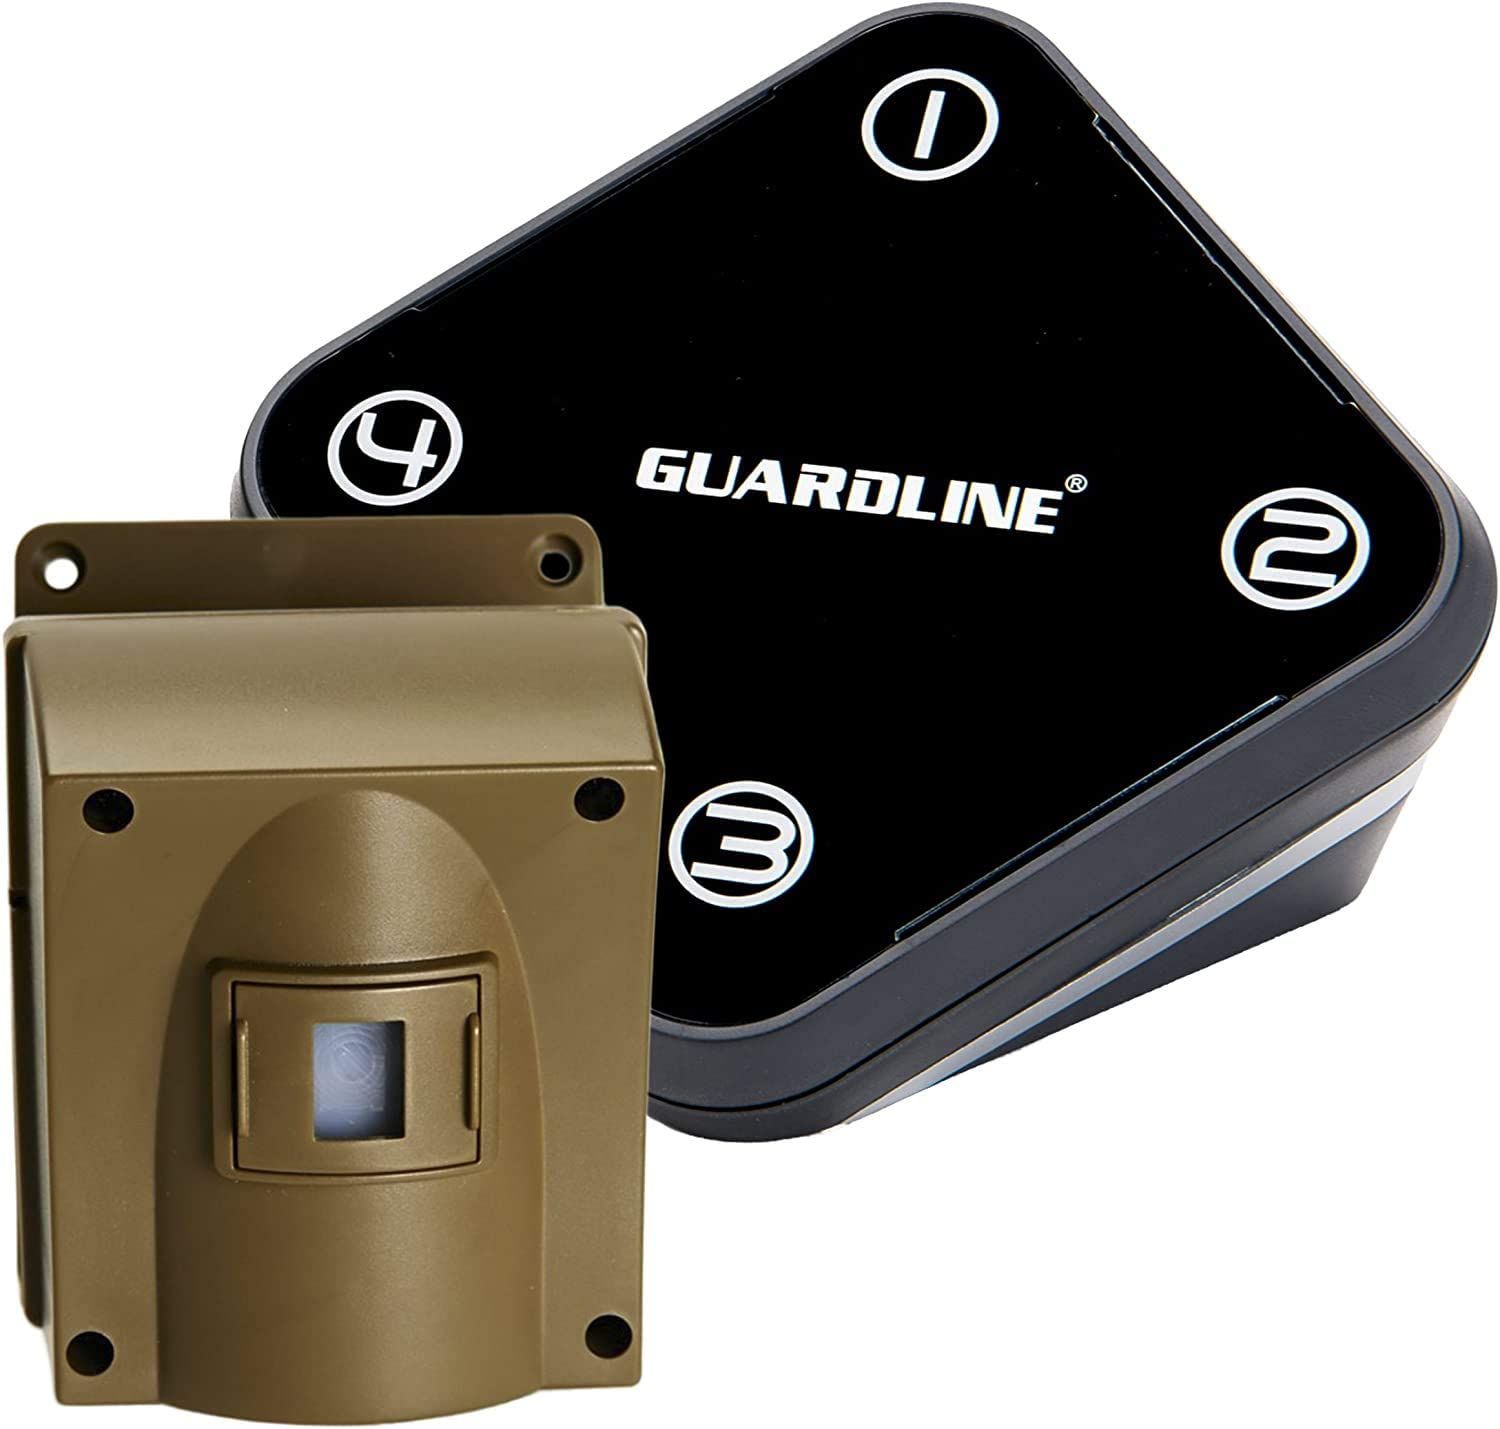 Guardline Wireless Driveway Alarm - $$title$$